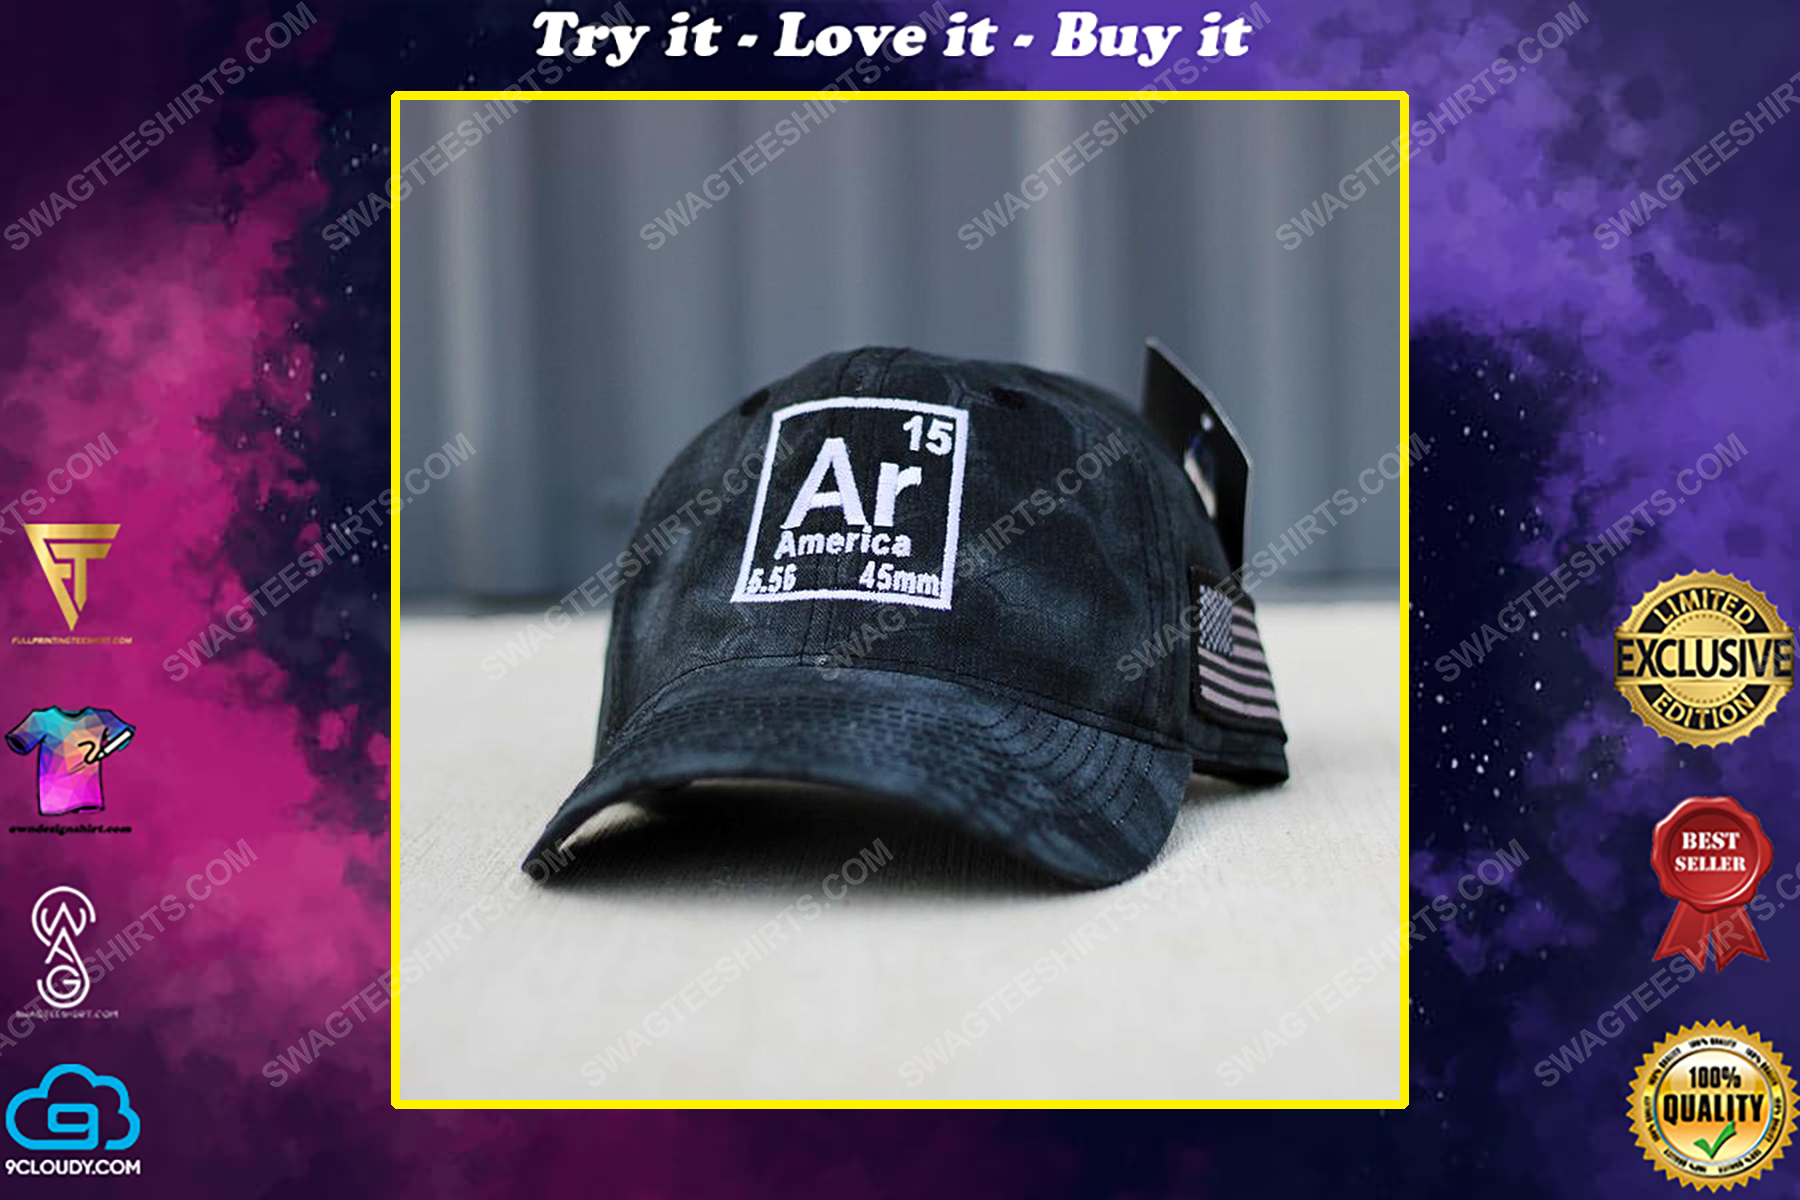 Ar 15 american full print classic hat